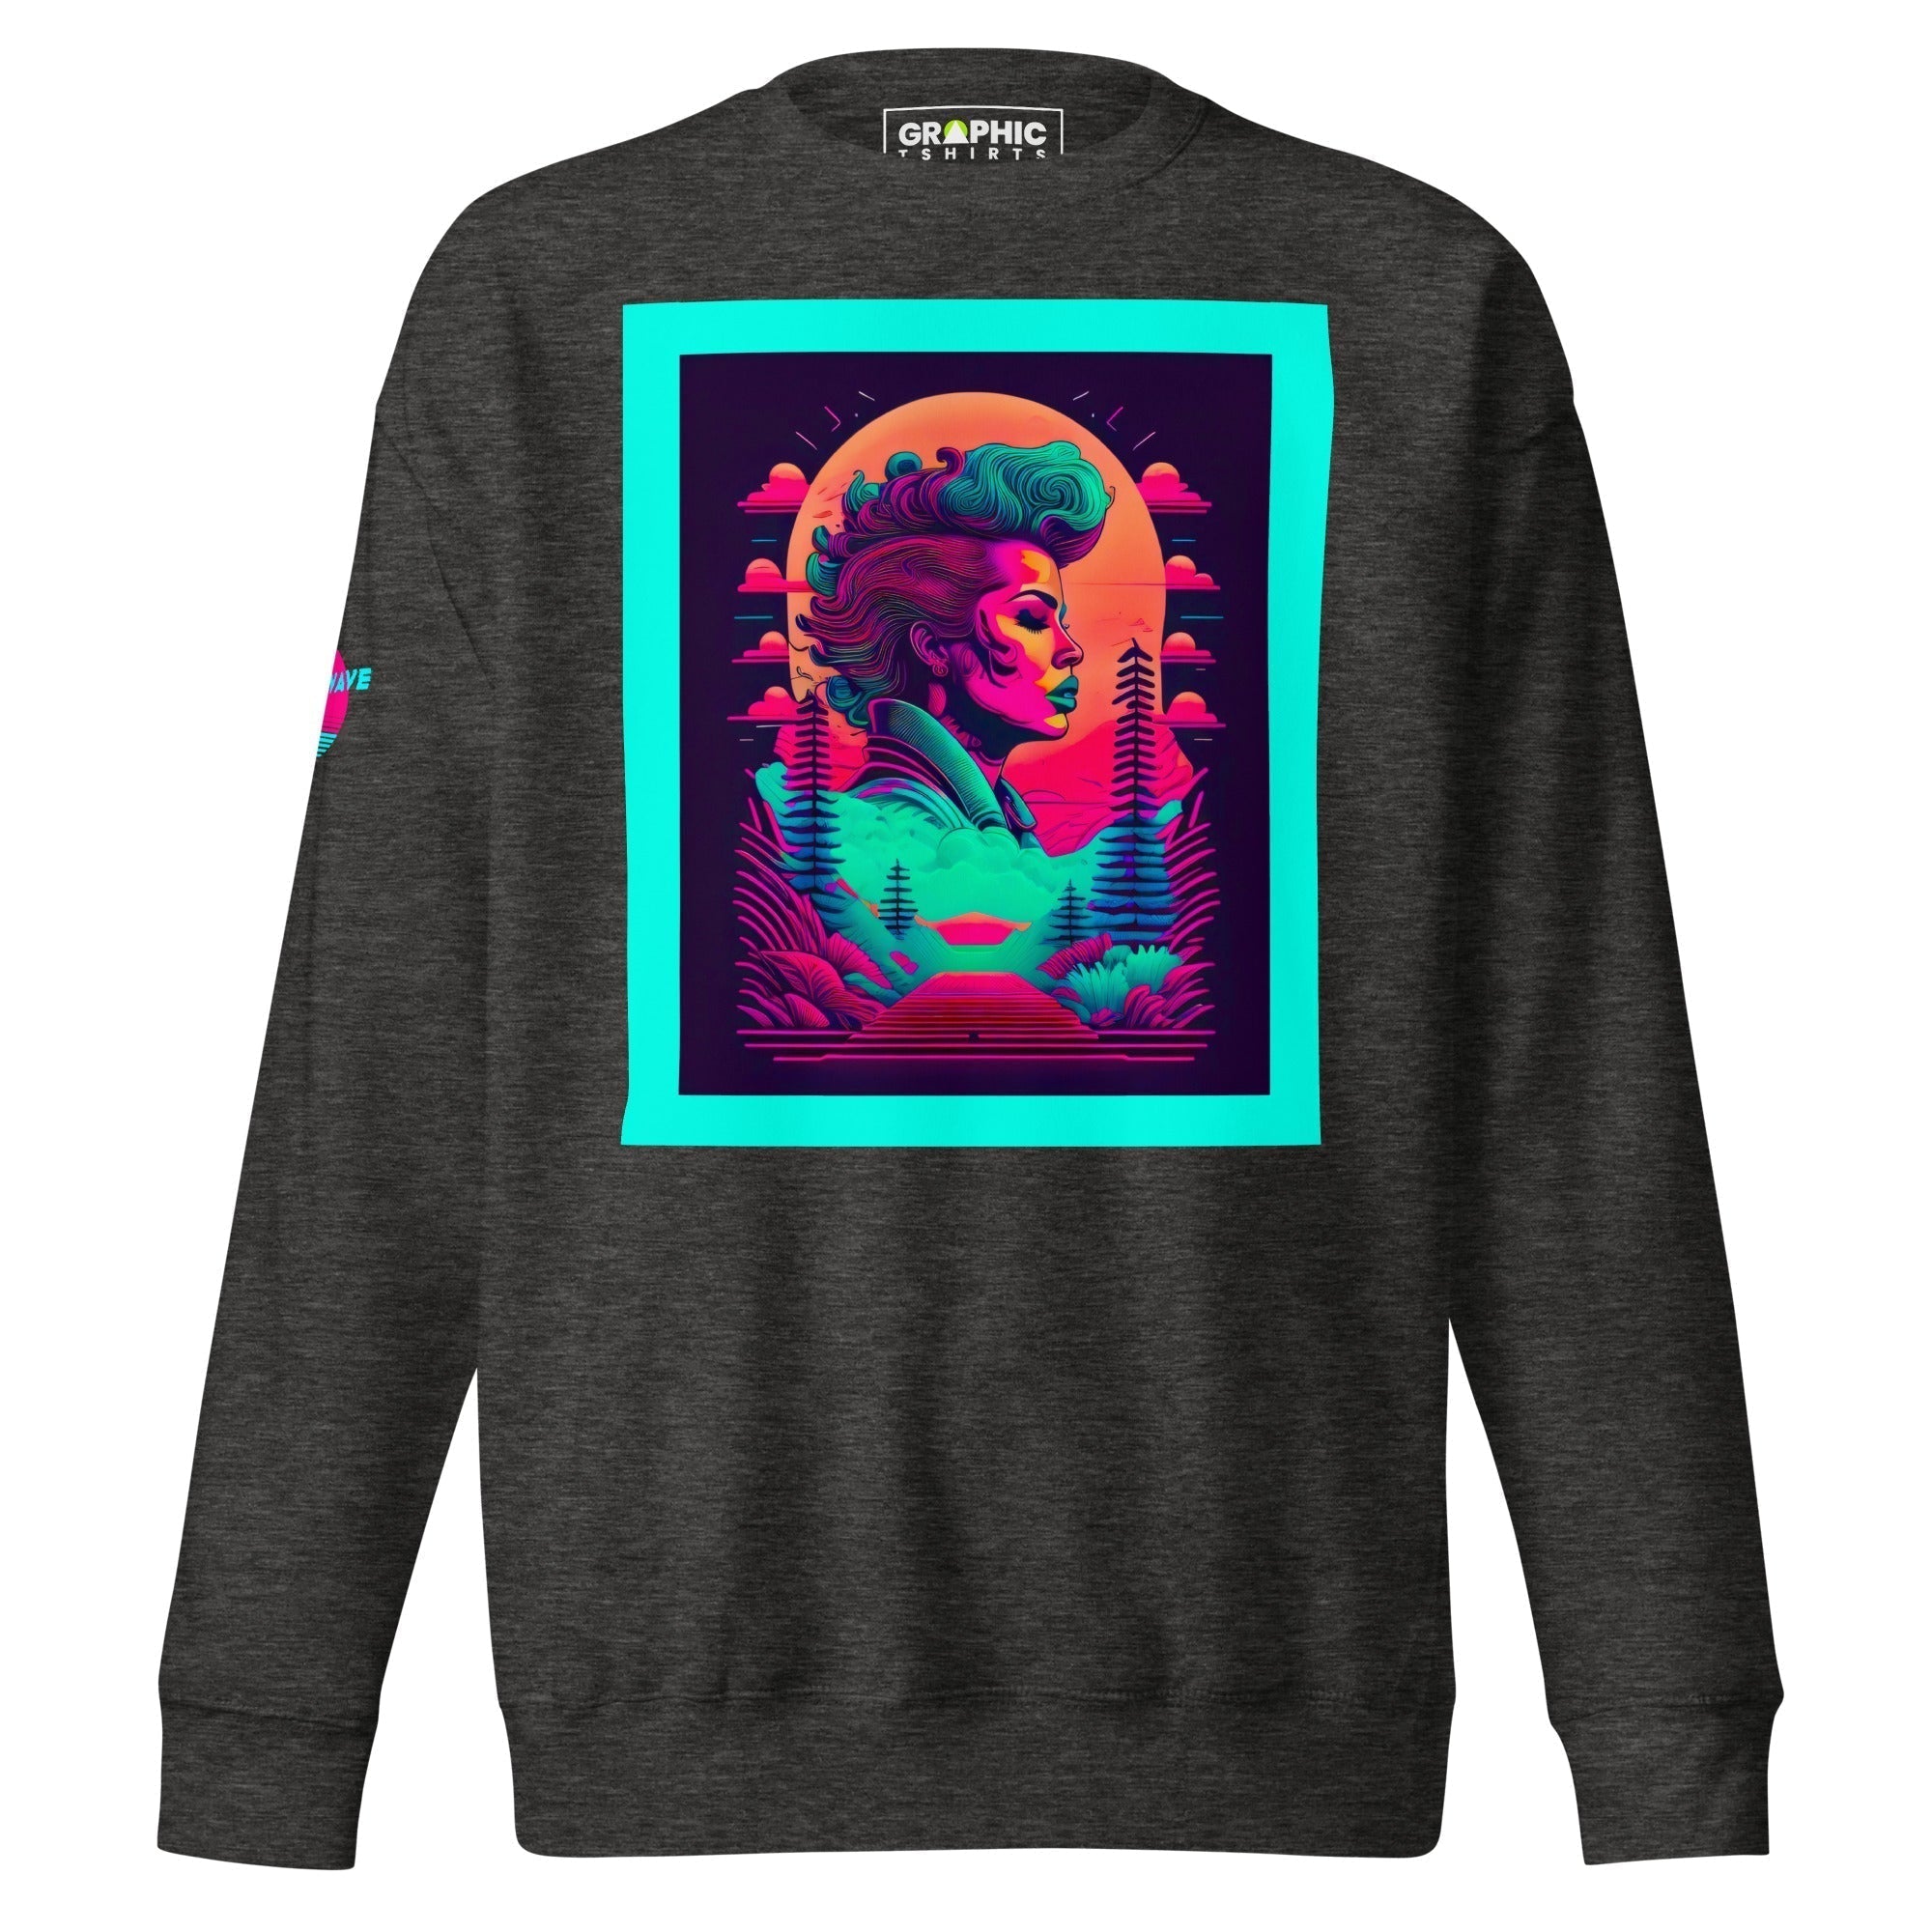 Unisex Premium Sweatshirt - Vaporwave Series v.22 - GRAPHIC T-SHIRTS